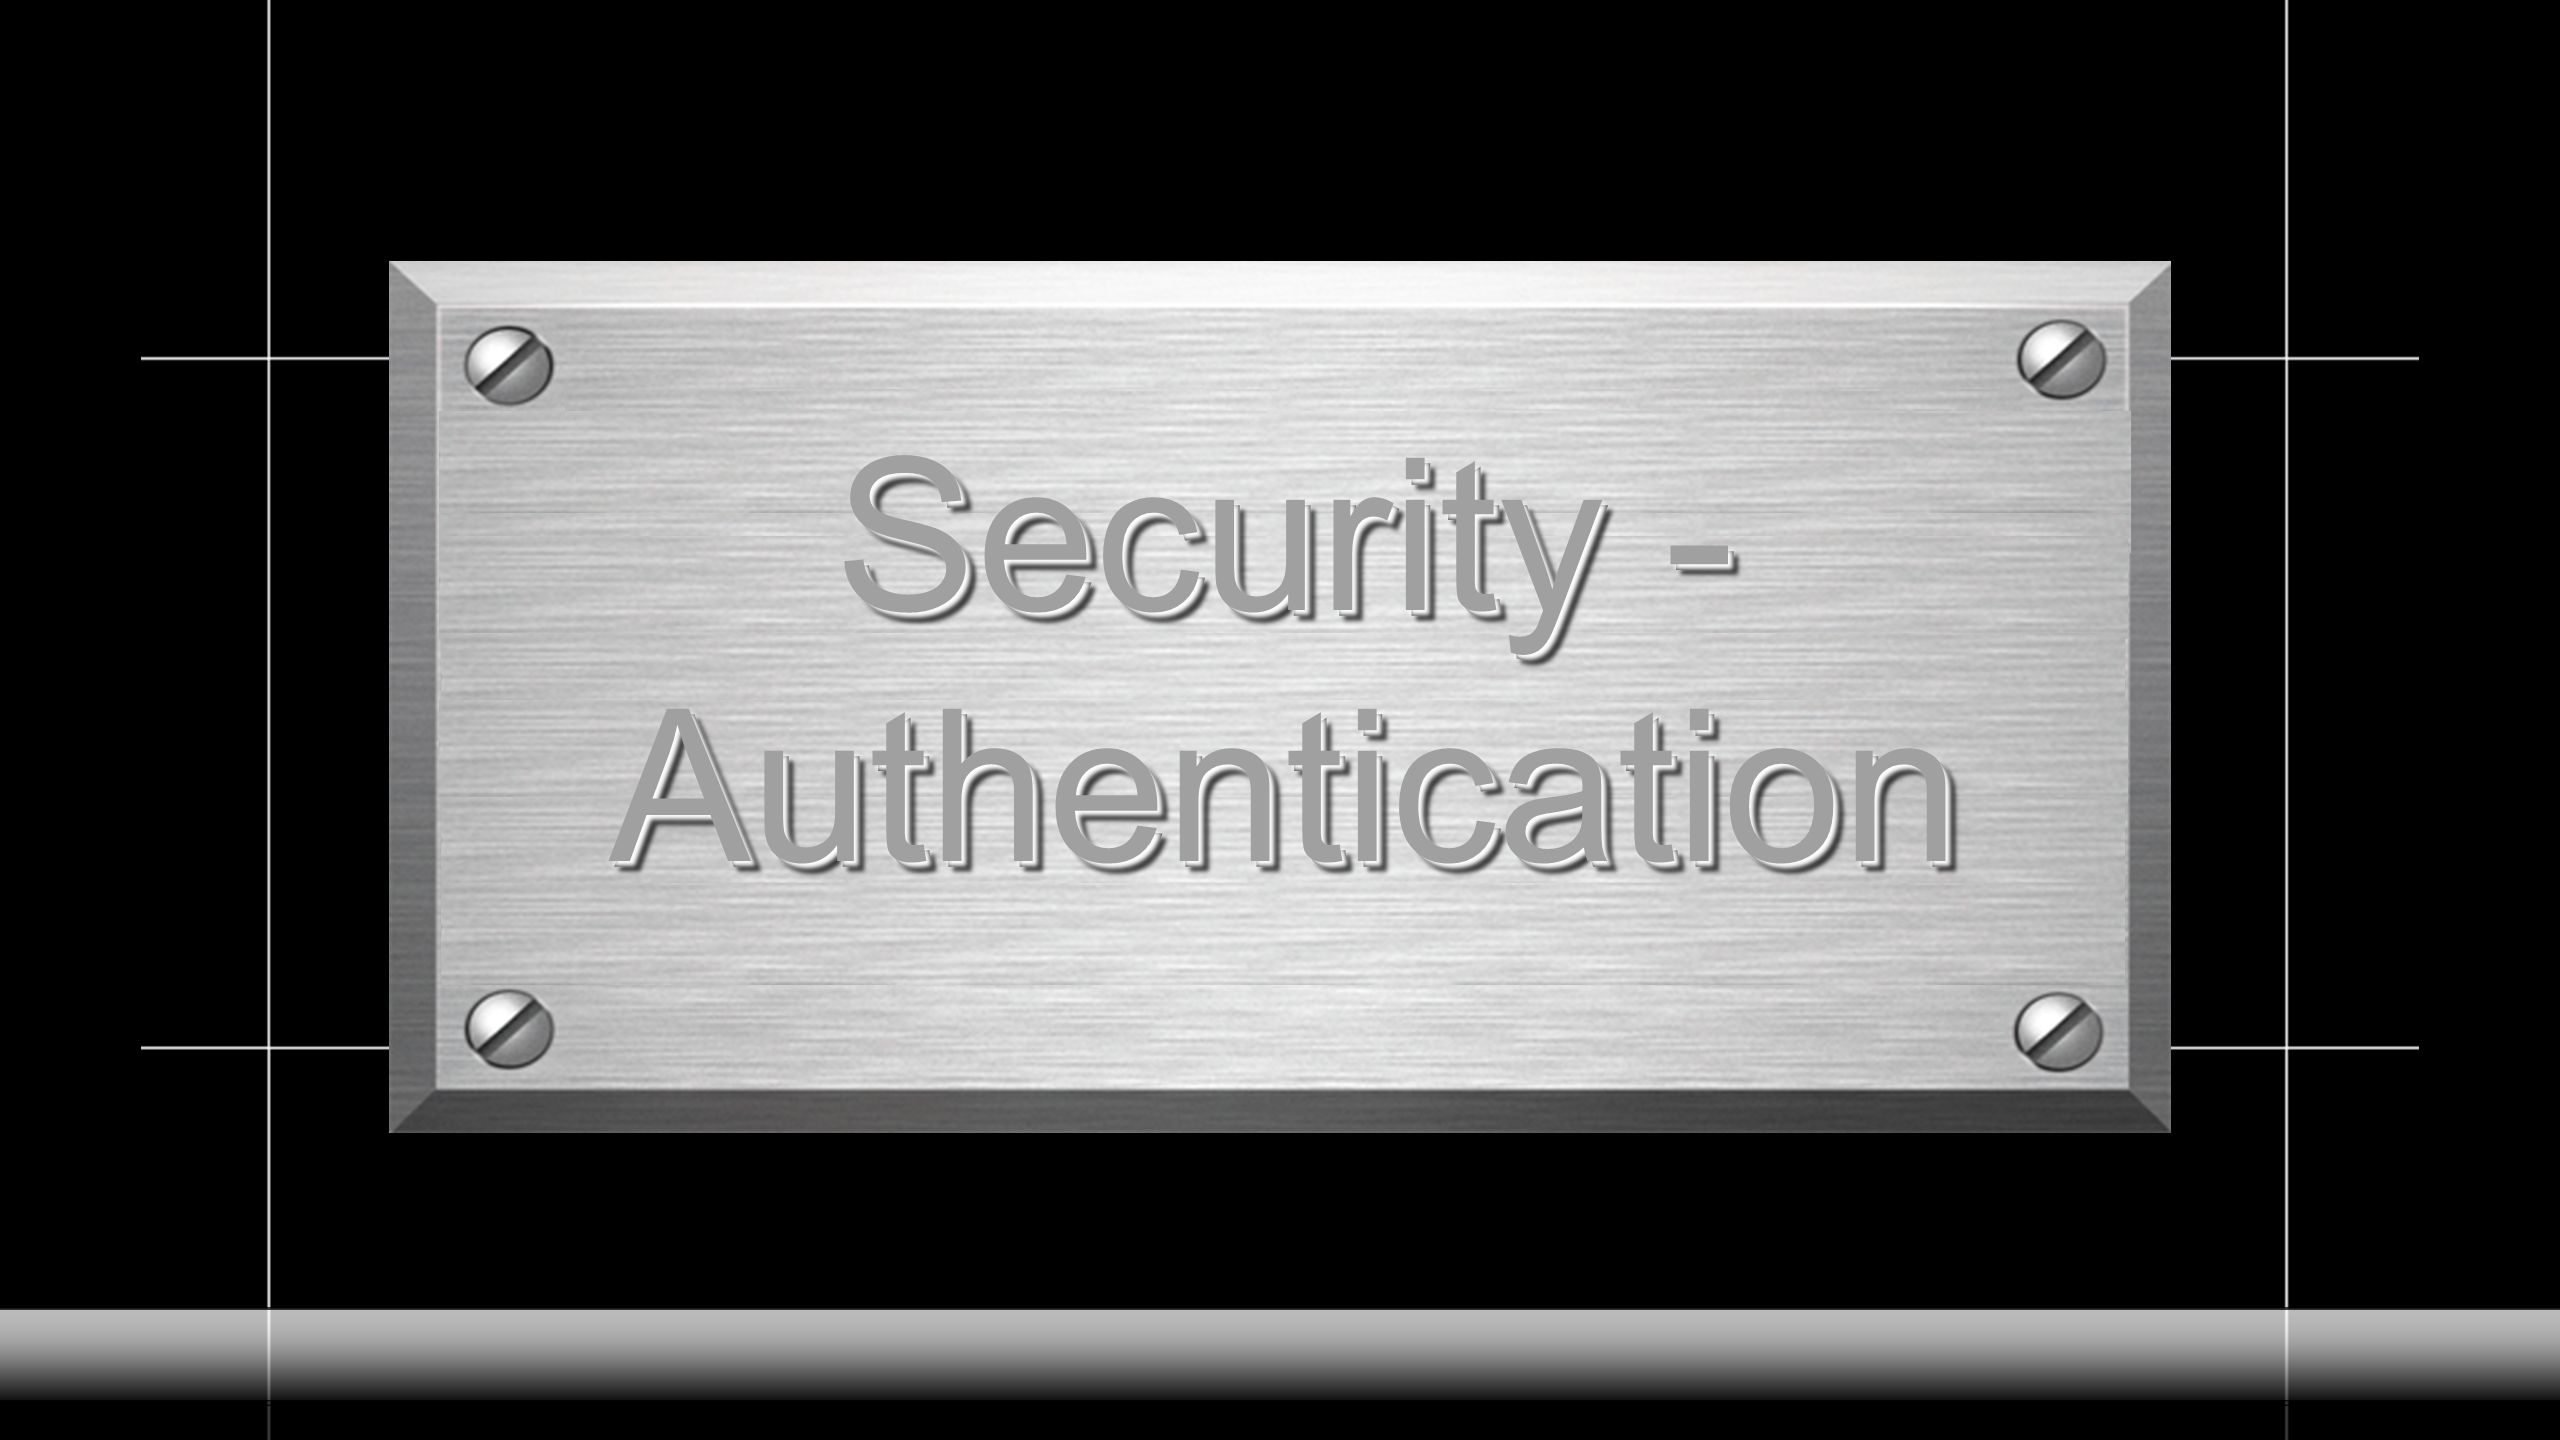 Secure Foundation Security - Authentication Authentication